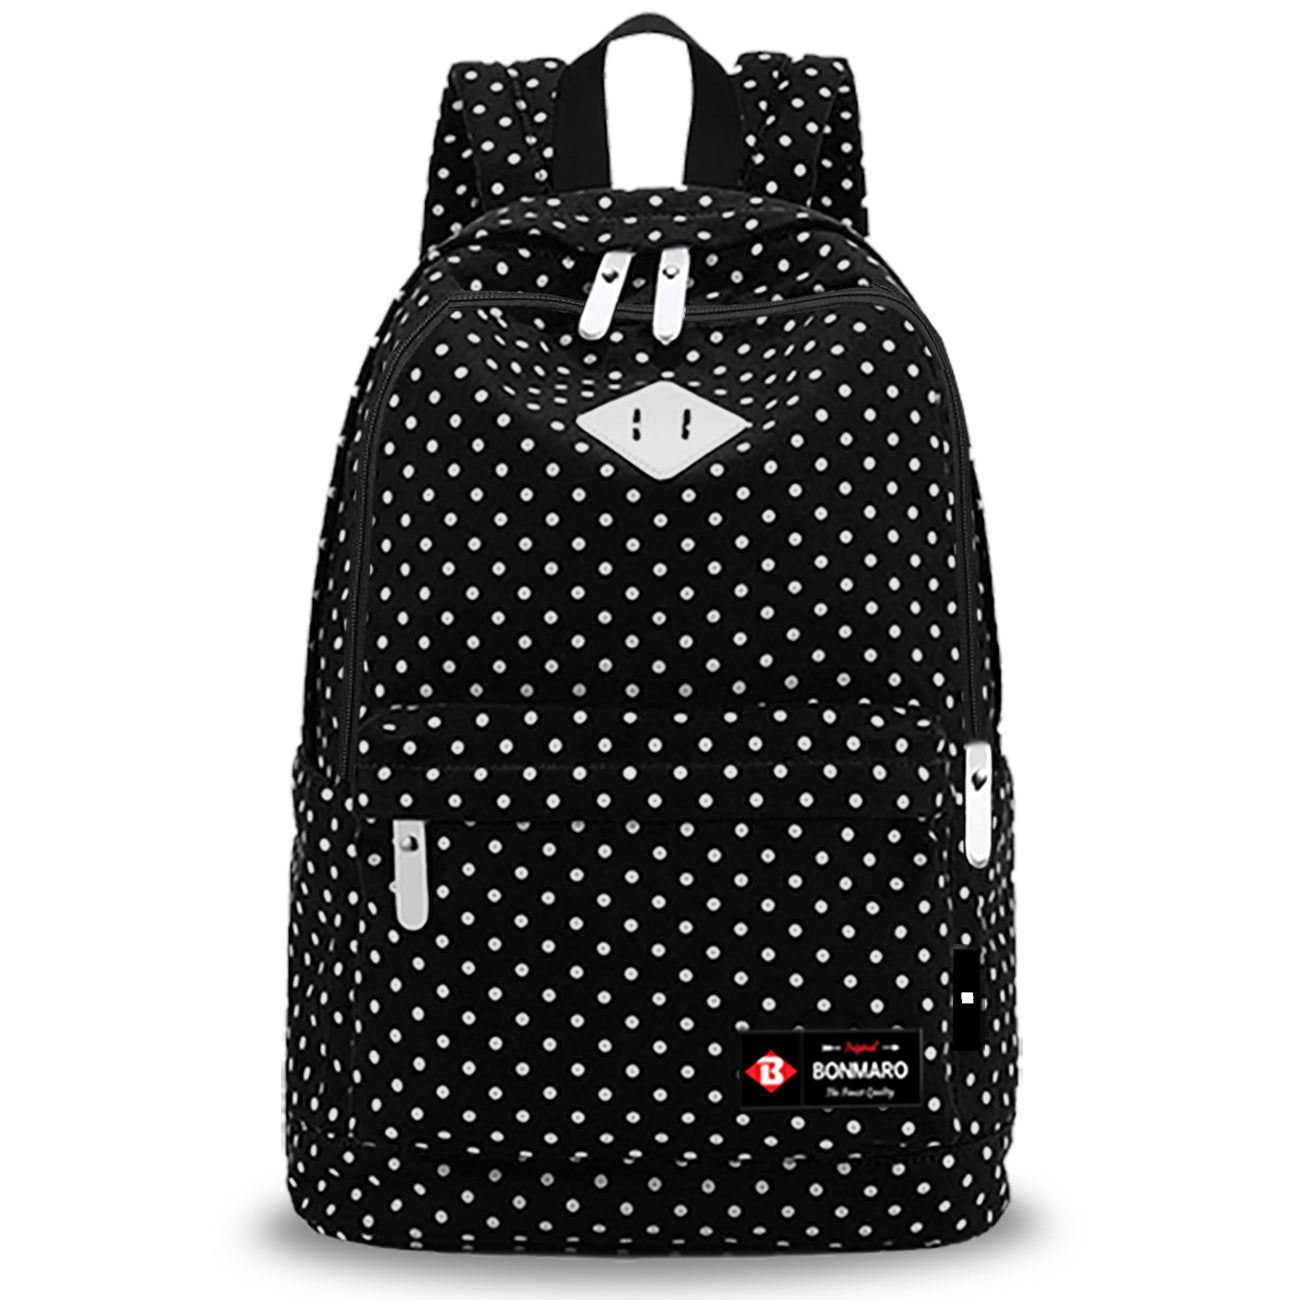 Teeny Tiny Backpack – Polka Dots Pink – Bonmaro Bags